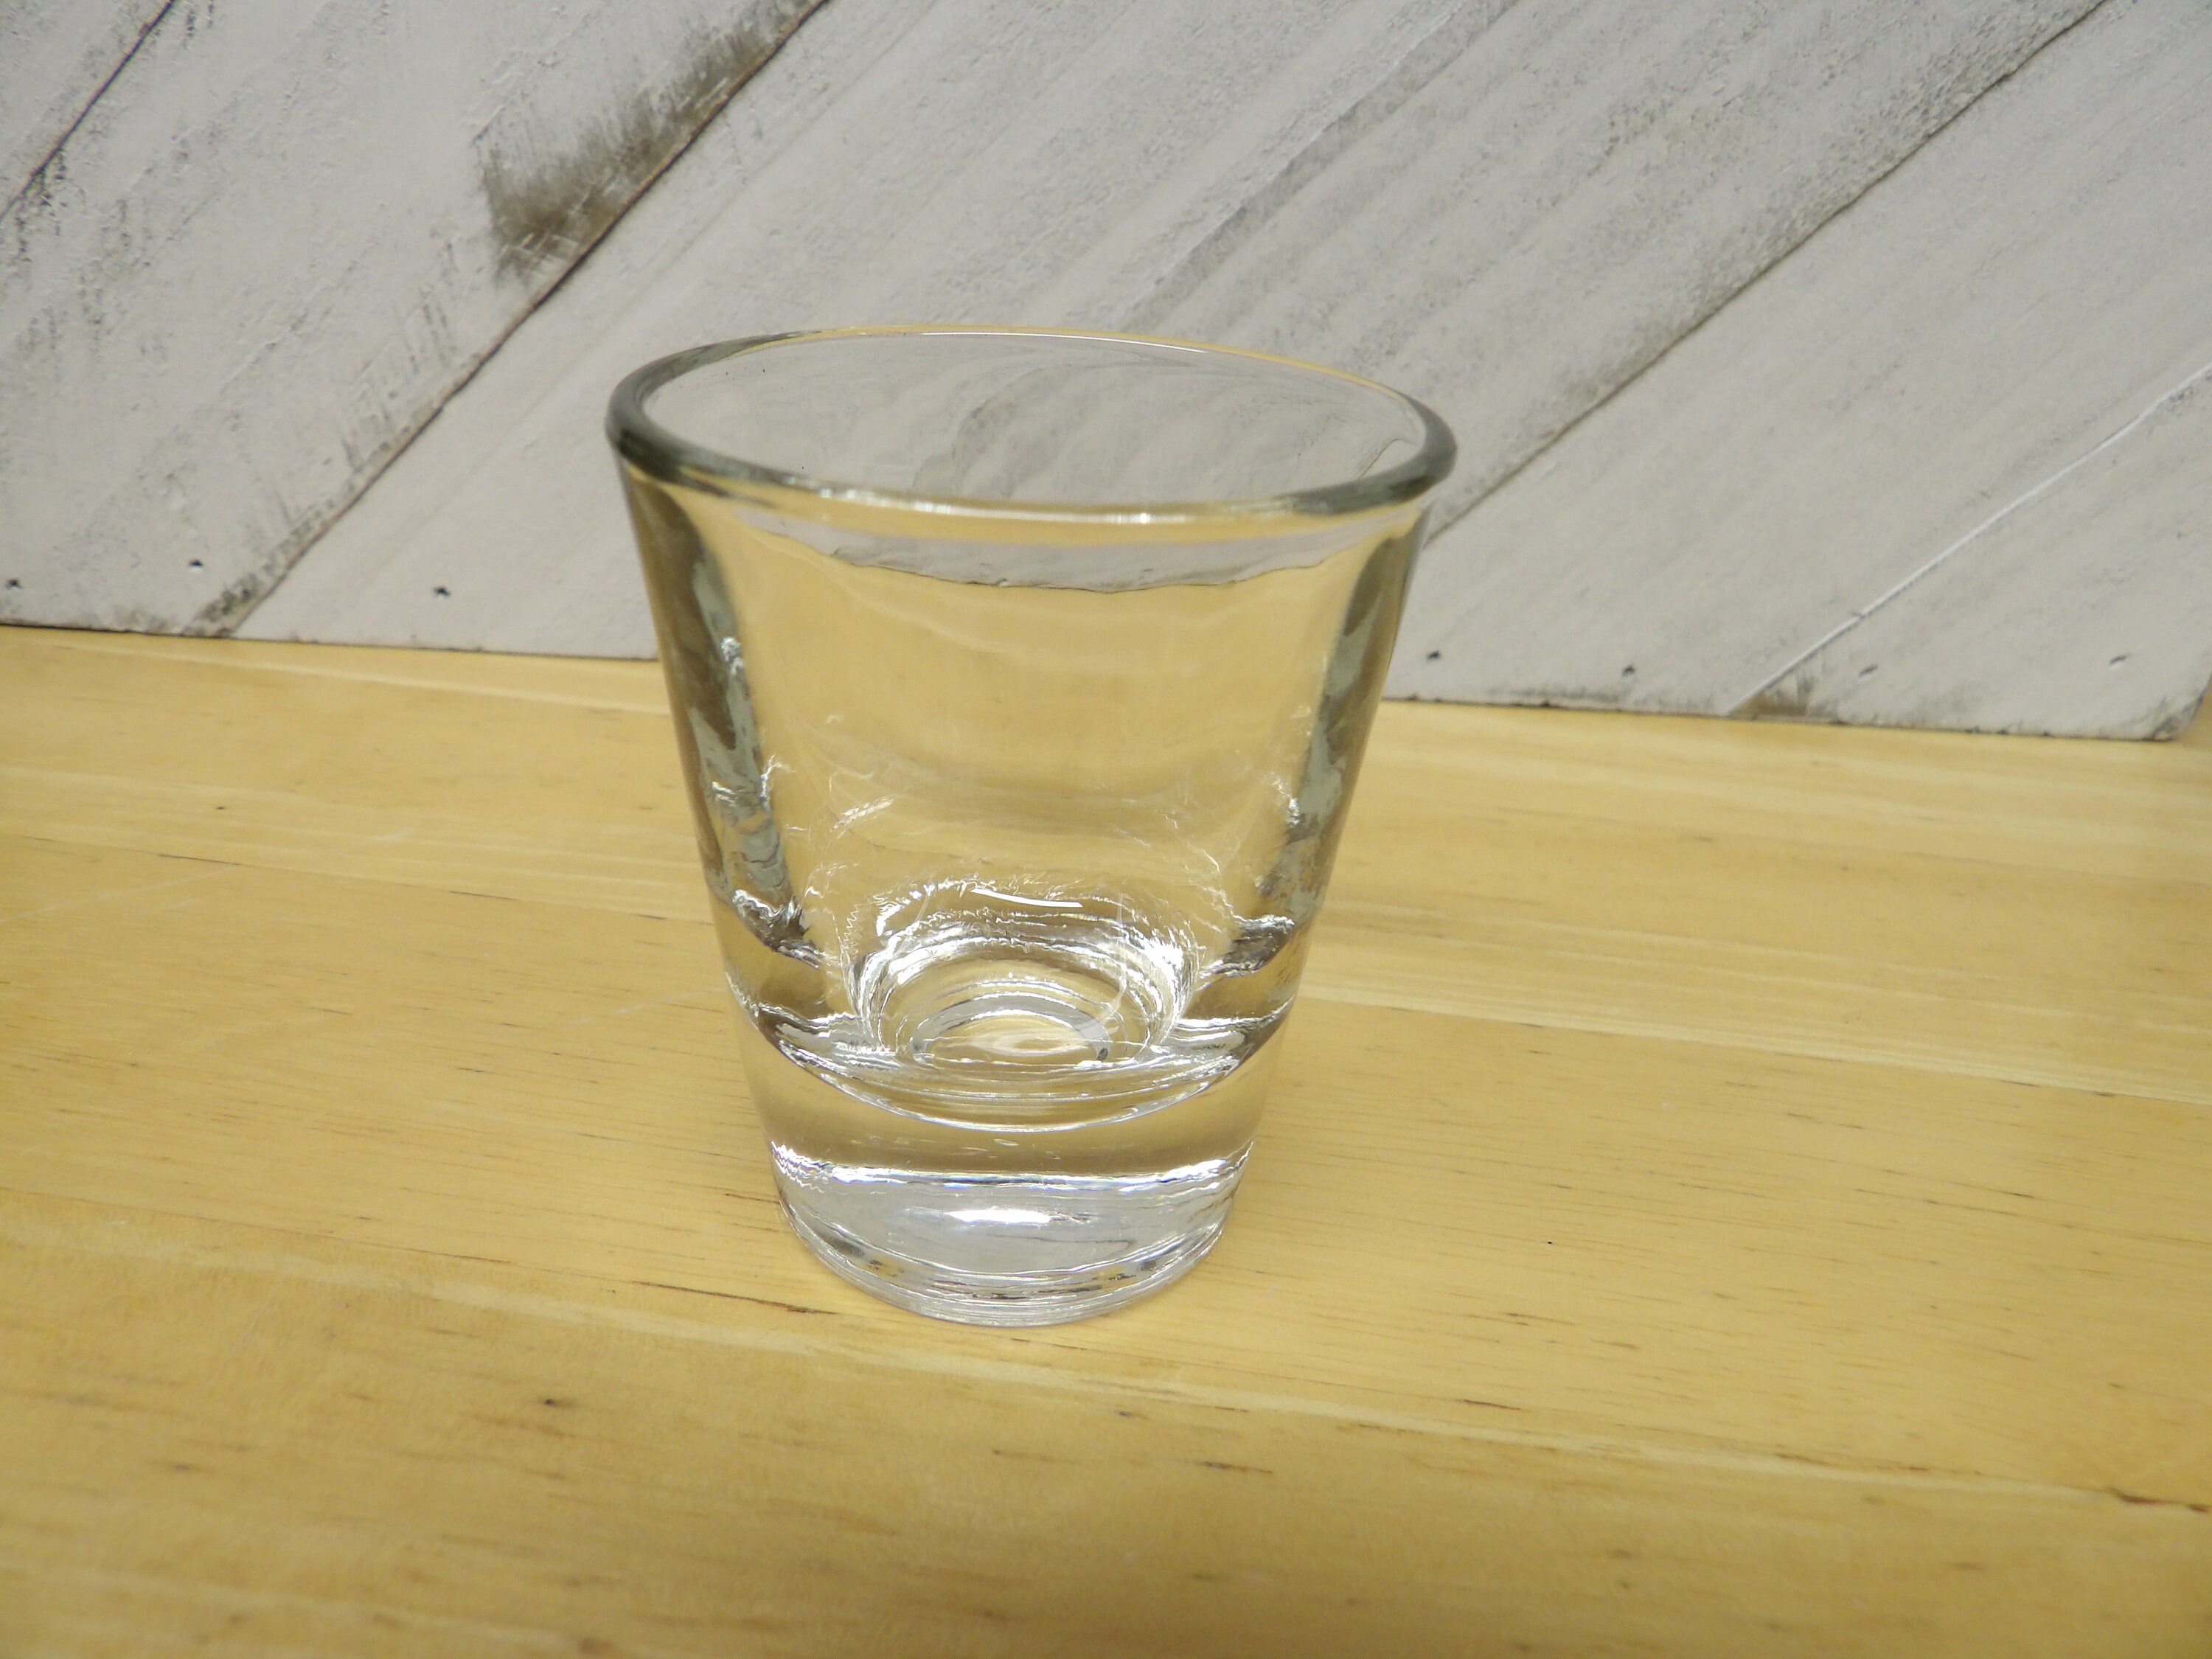 Shot Glass Measure Cup - Acrylic- Incremental Measurements - 1 oz. - 6 —  CHIMIYA